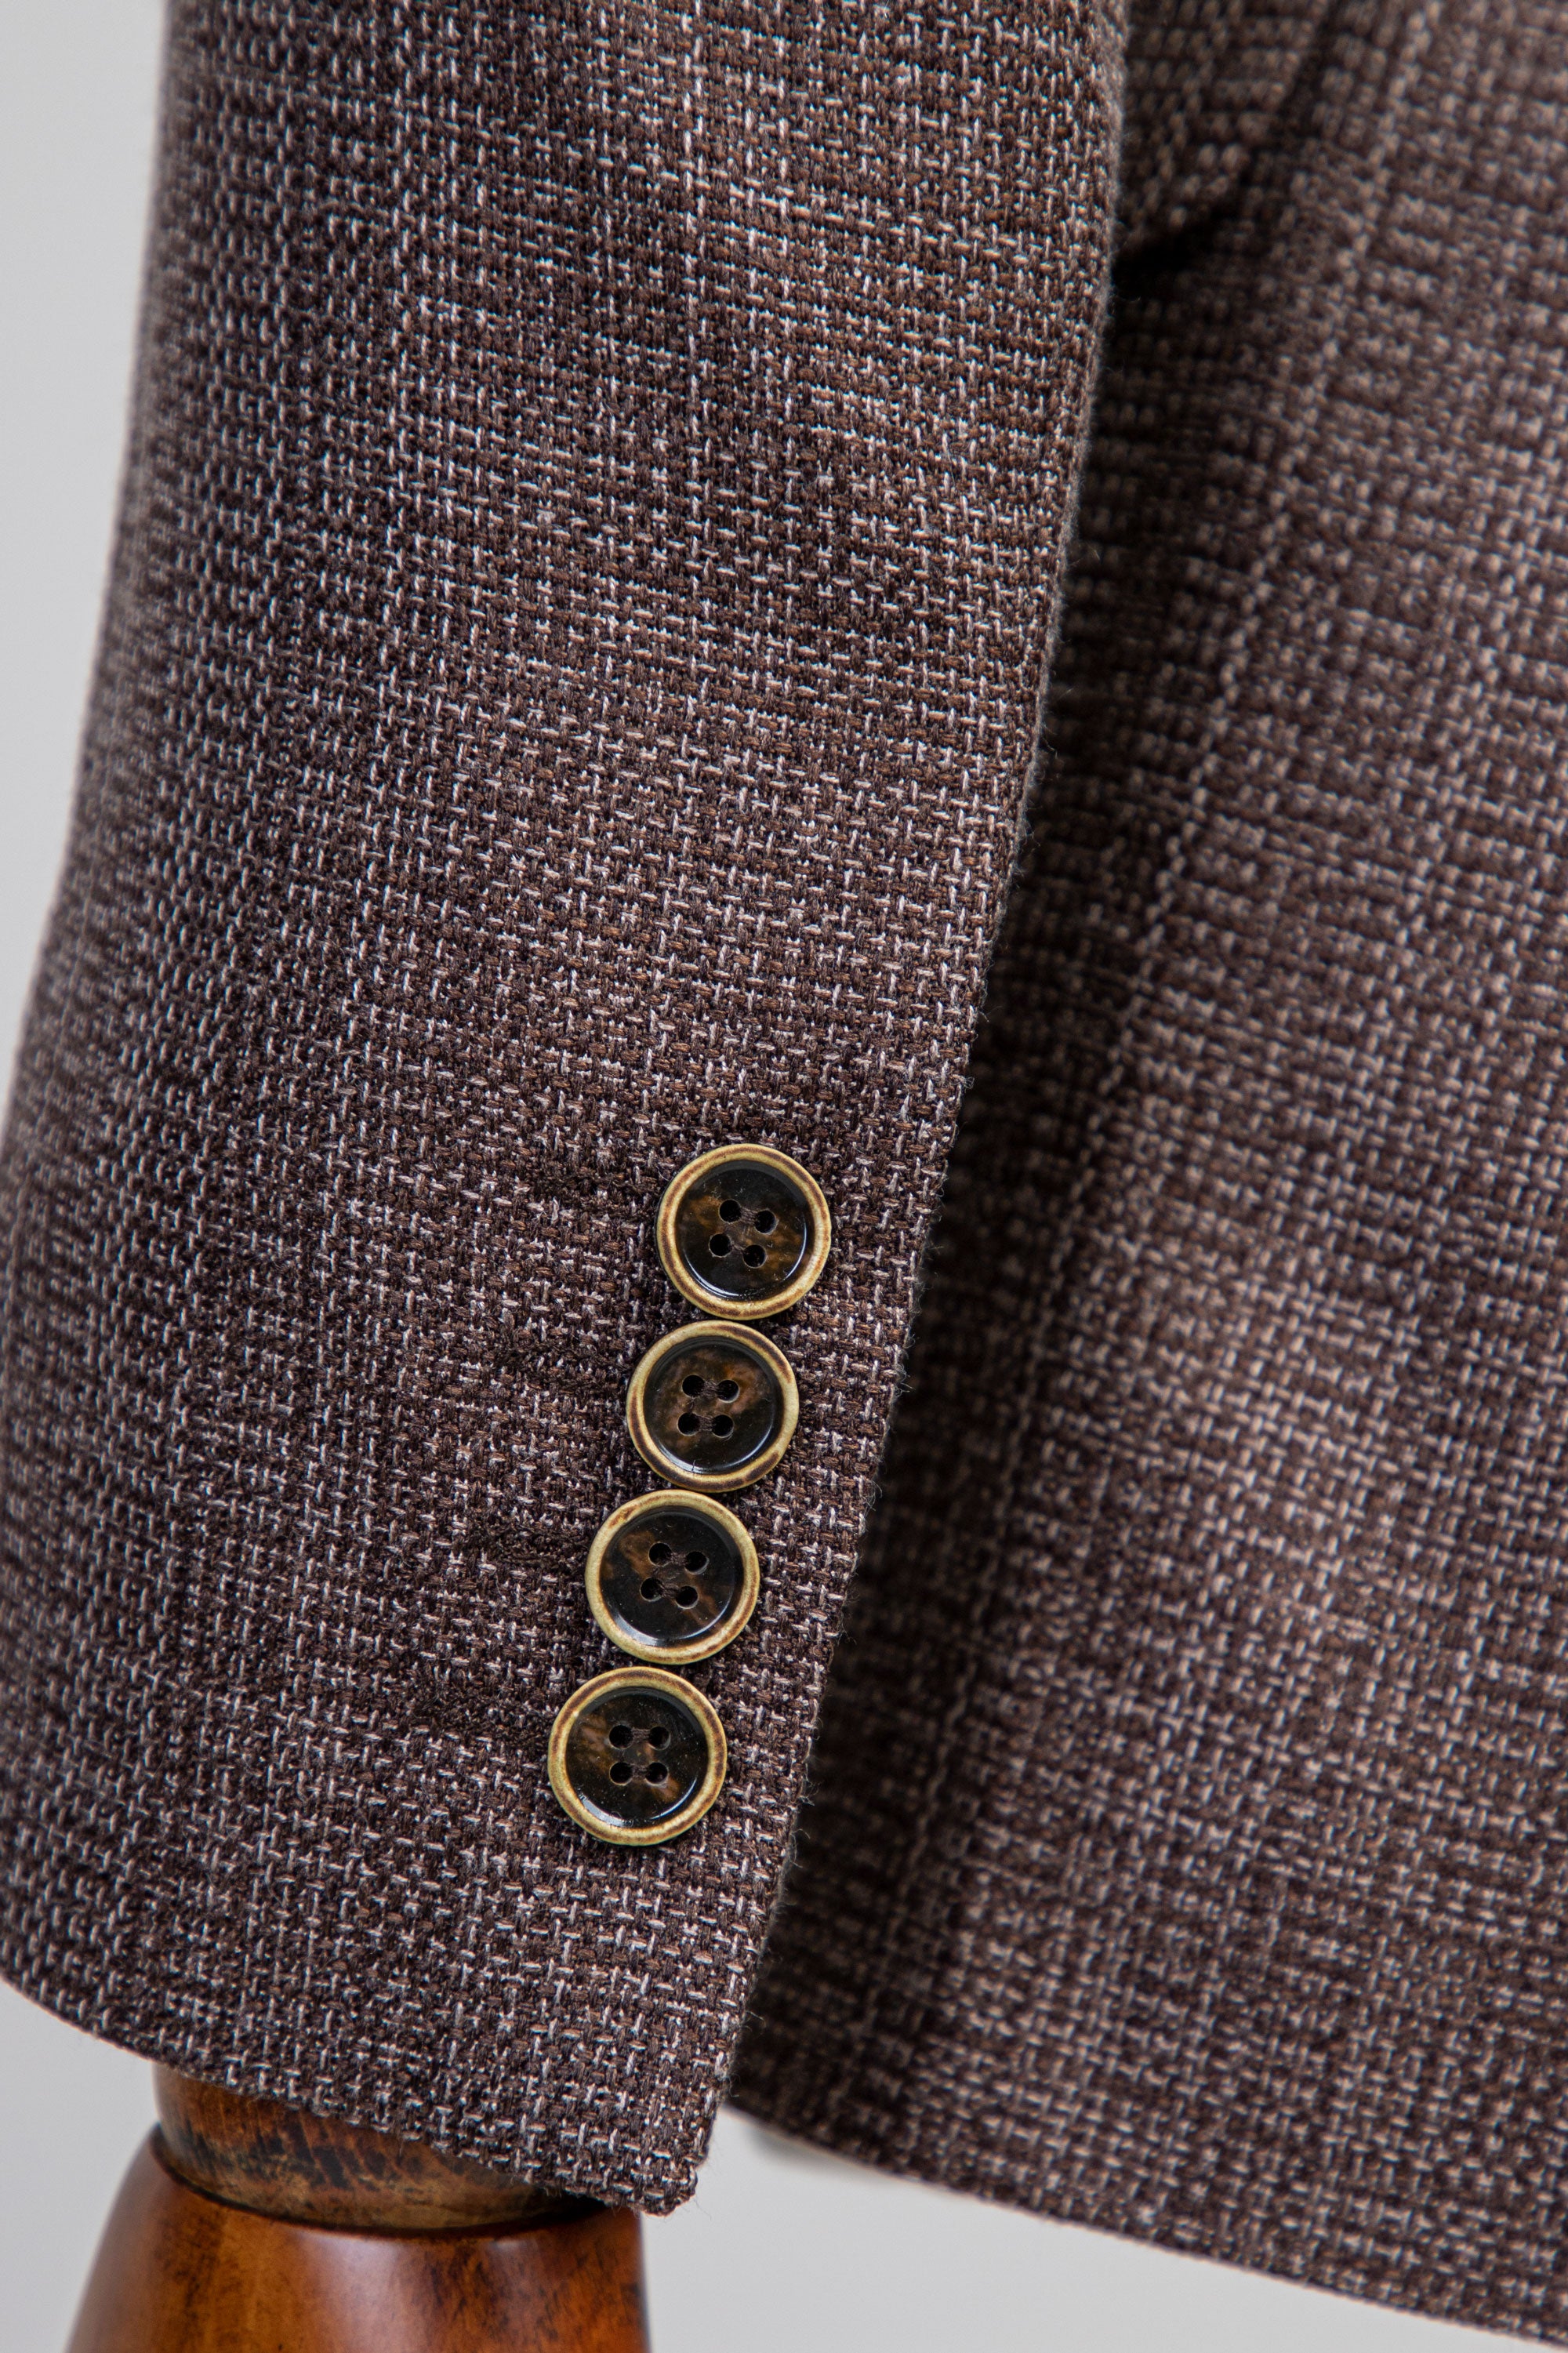 Formal Light Brown Coat